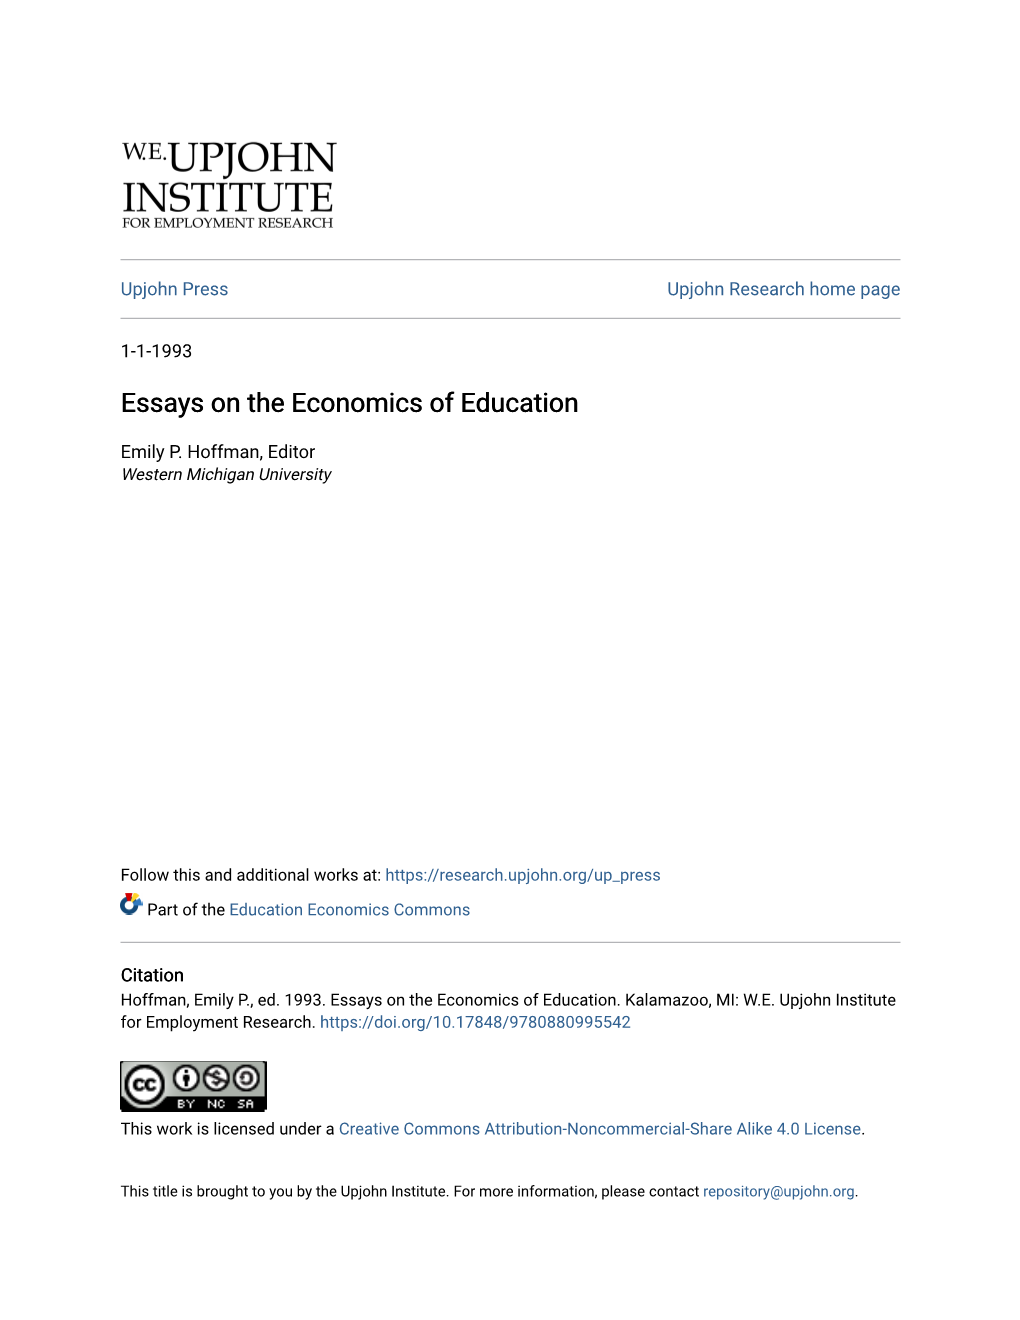 Essays on the Economics of Education